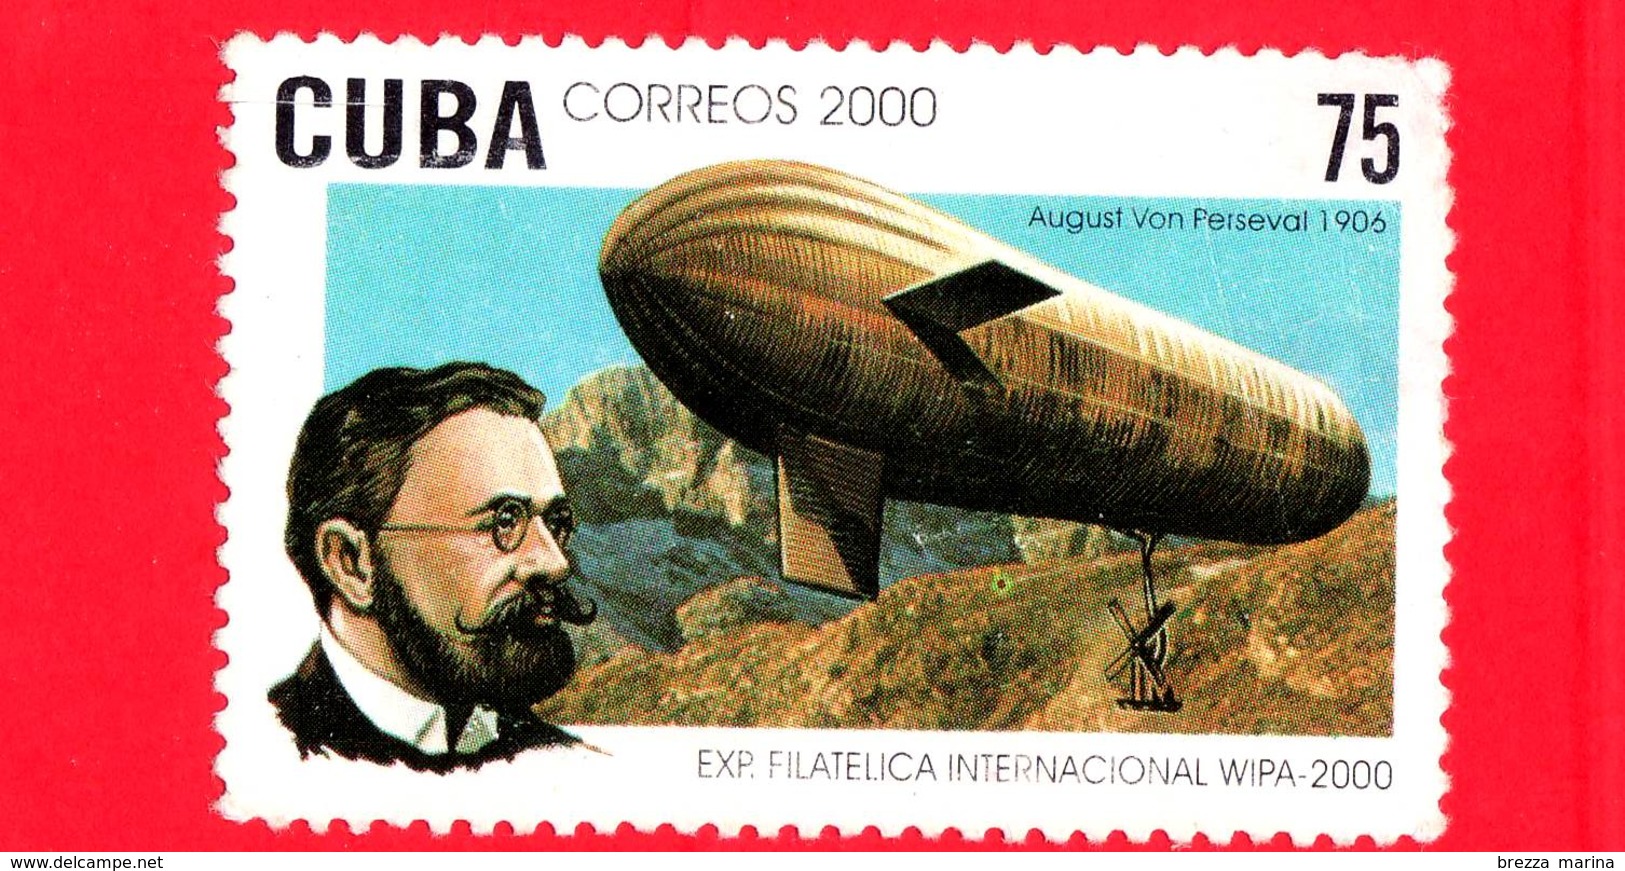 CUBA - Usato - 2000 - Mostra Filatelica WIPA 2000, Vienna - August Von Perseval, 1906 - 75 - Vedi.. - Used Stamps